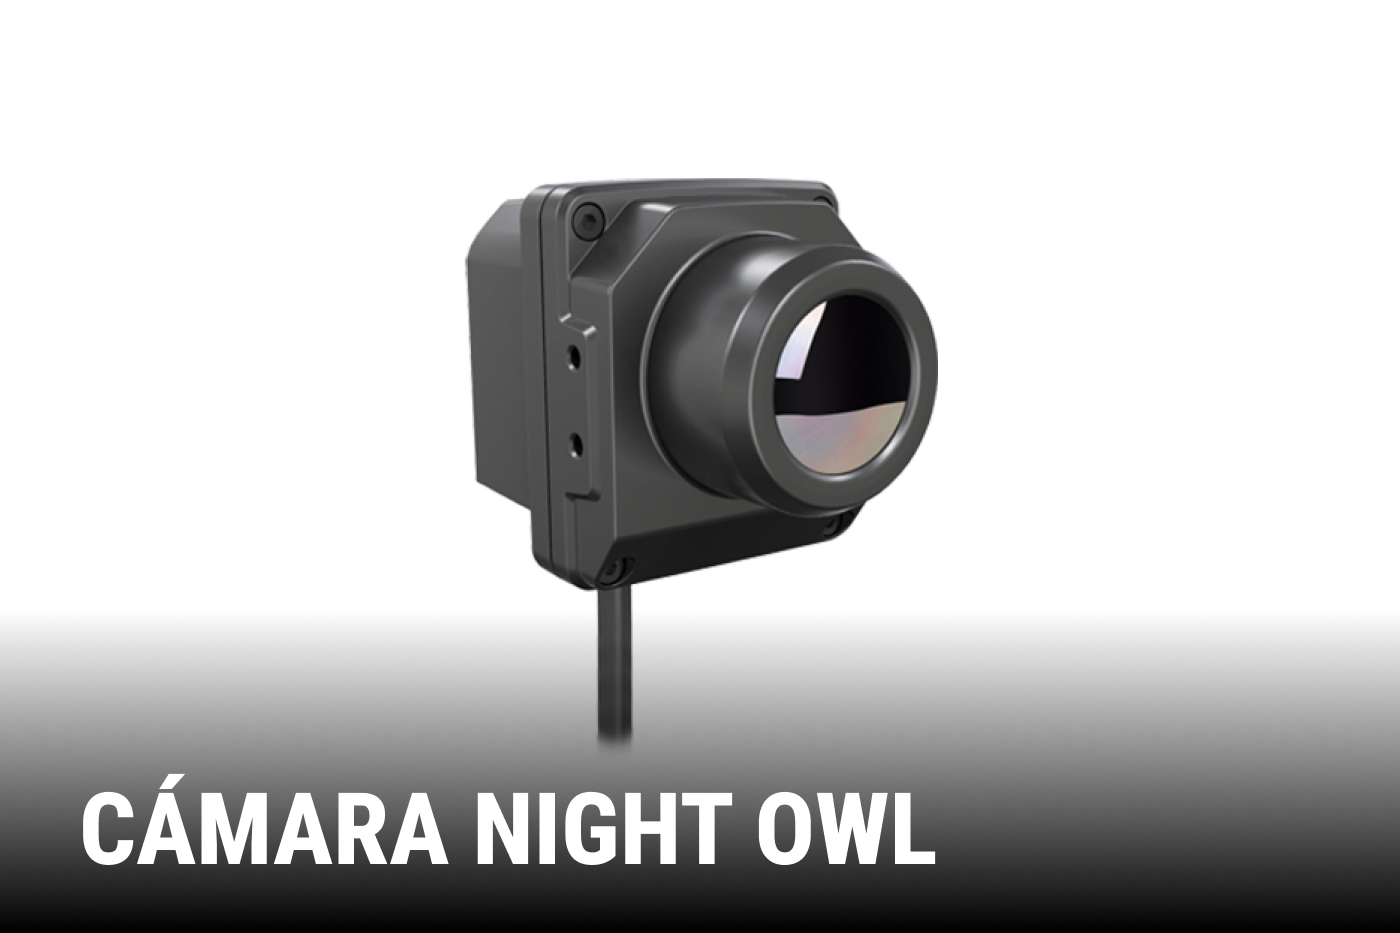 CAMARA NIGHT OWL